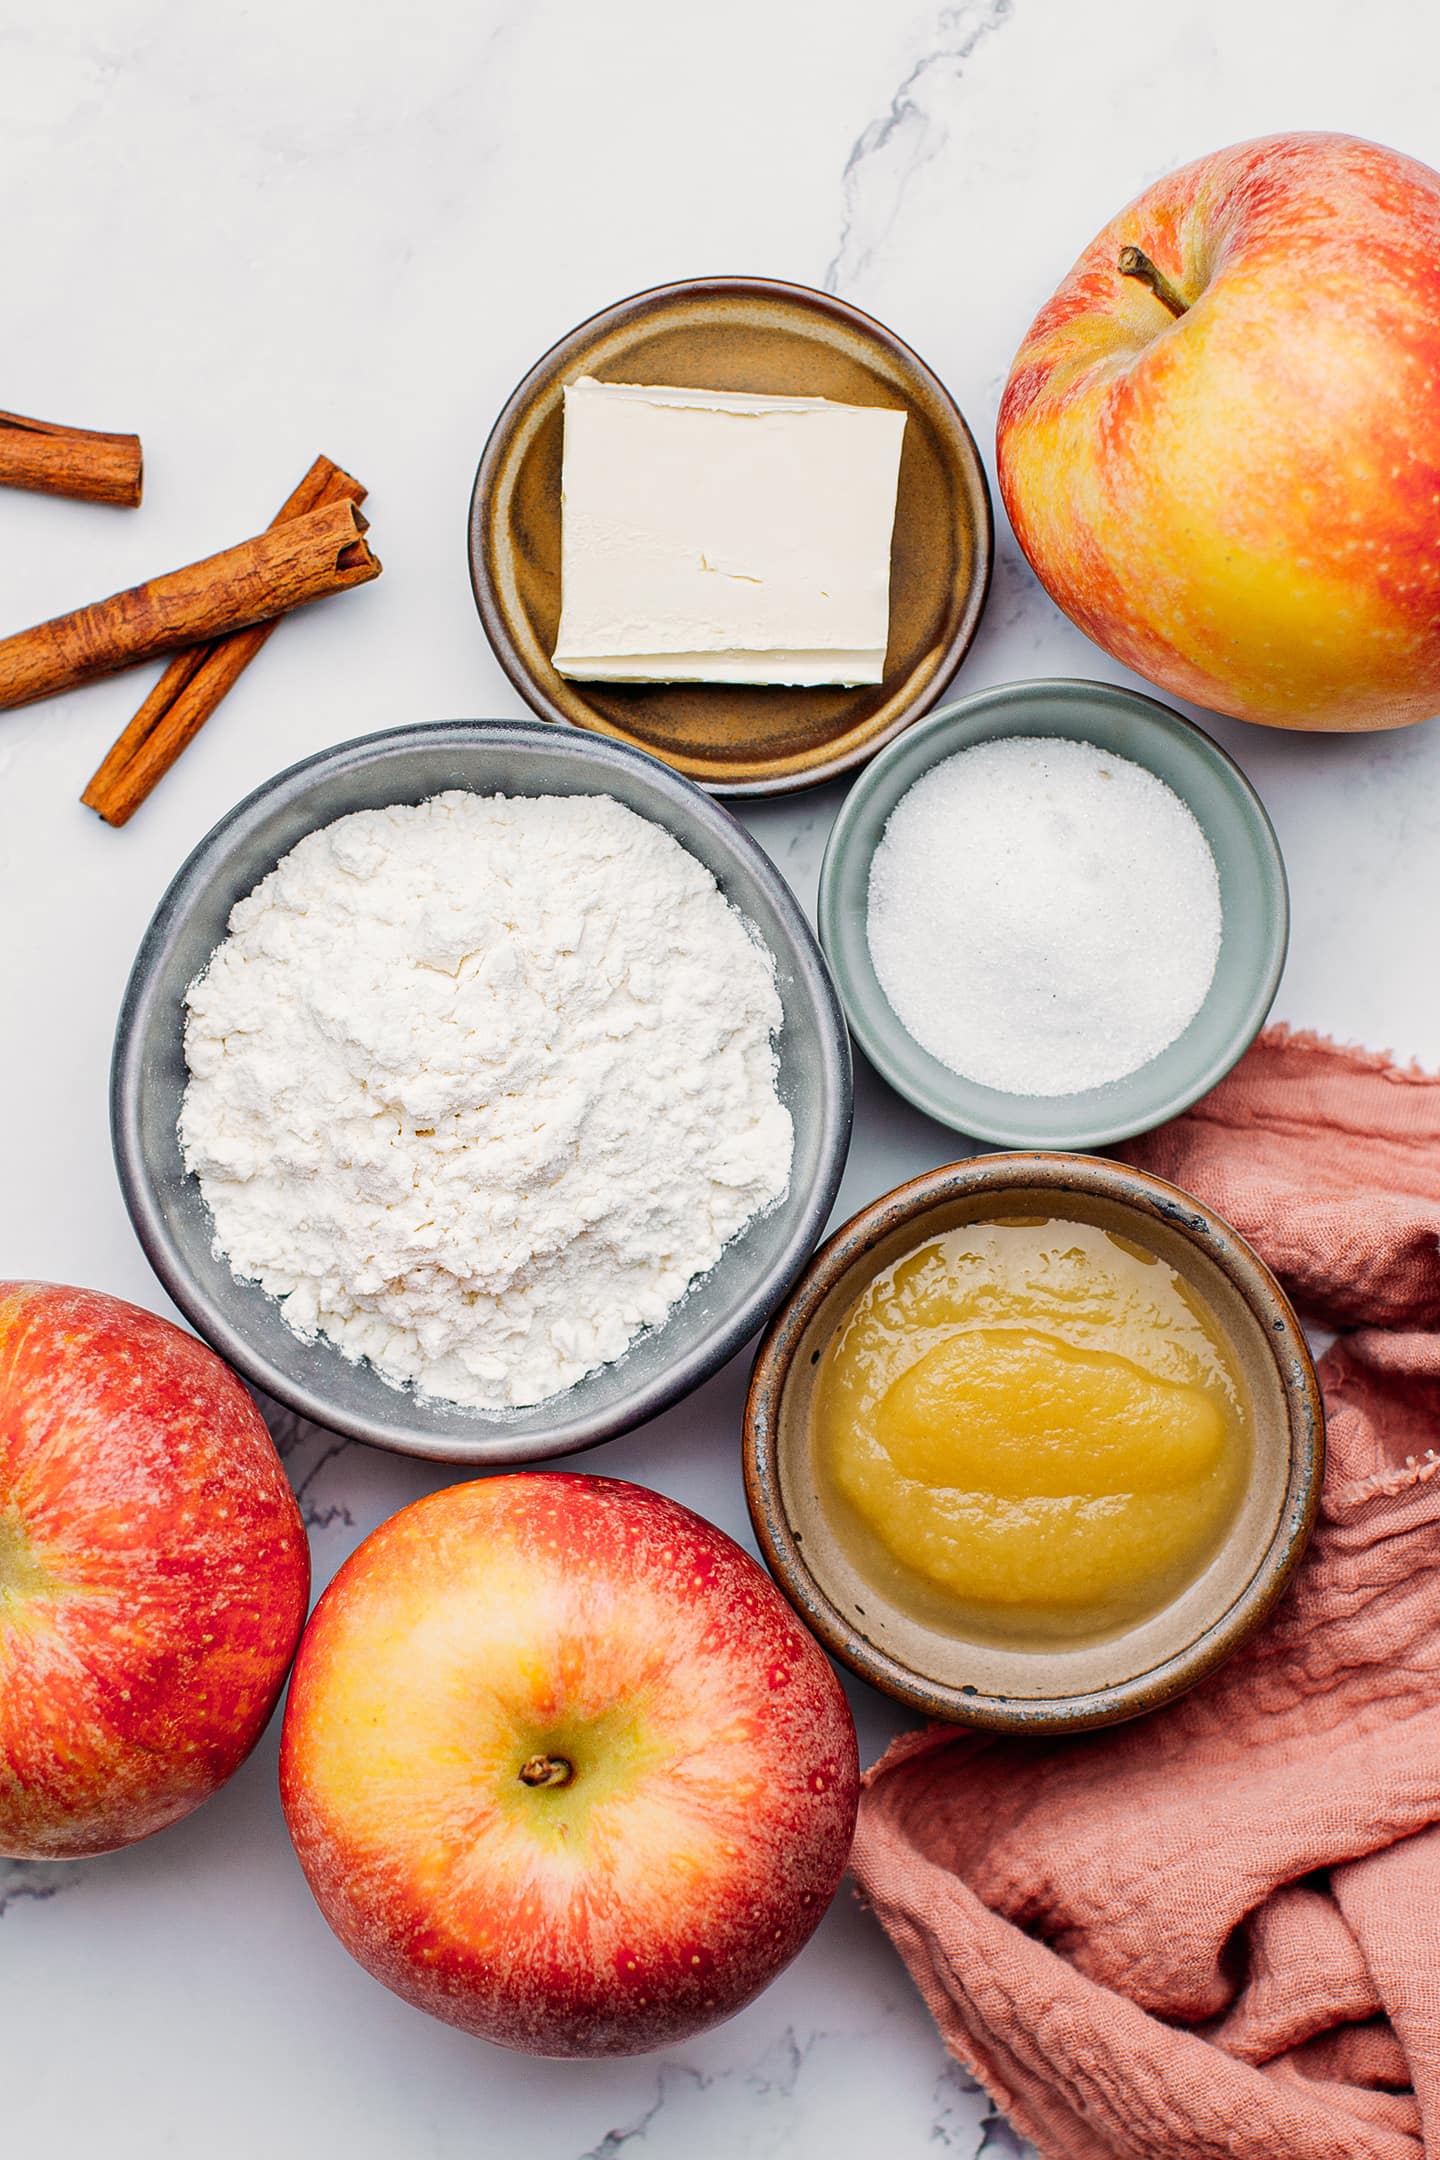 Ingredients like flour, apples, applesauce, and sugar.